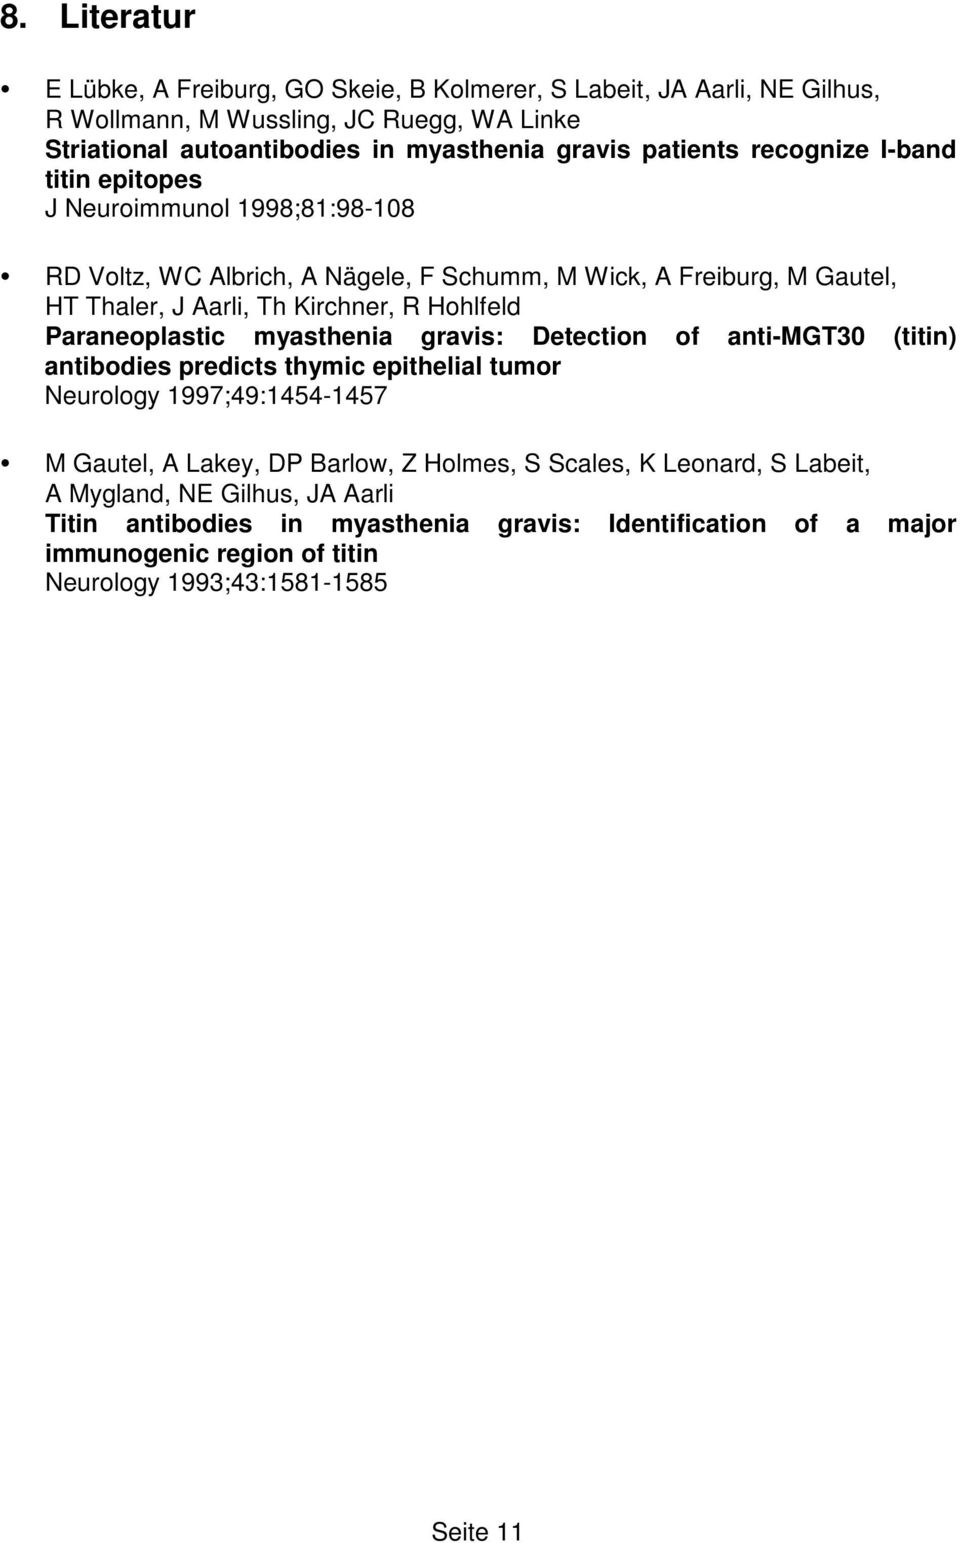 Hohlfeld Paraneoplastic myasthenia gravis: Detection of anti-mgt30 (titin) antibodies predicts thymic epithelial tumor Neurology 1997;49:1454-1457 M Gautel, A Lakey, DP Barlow, Z